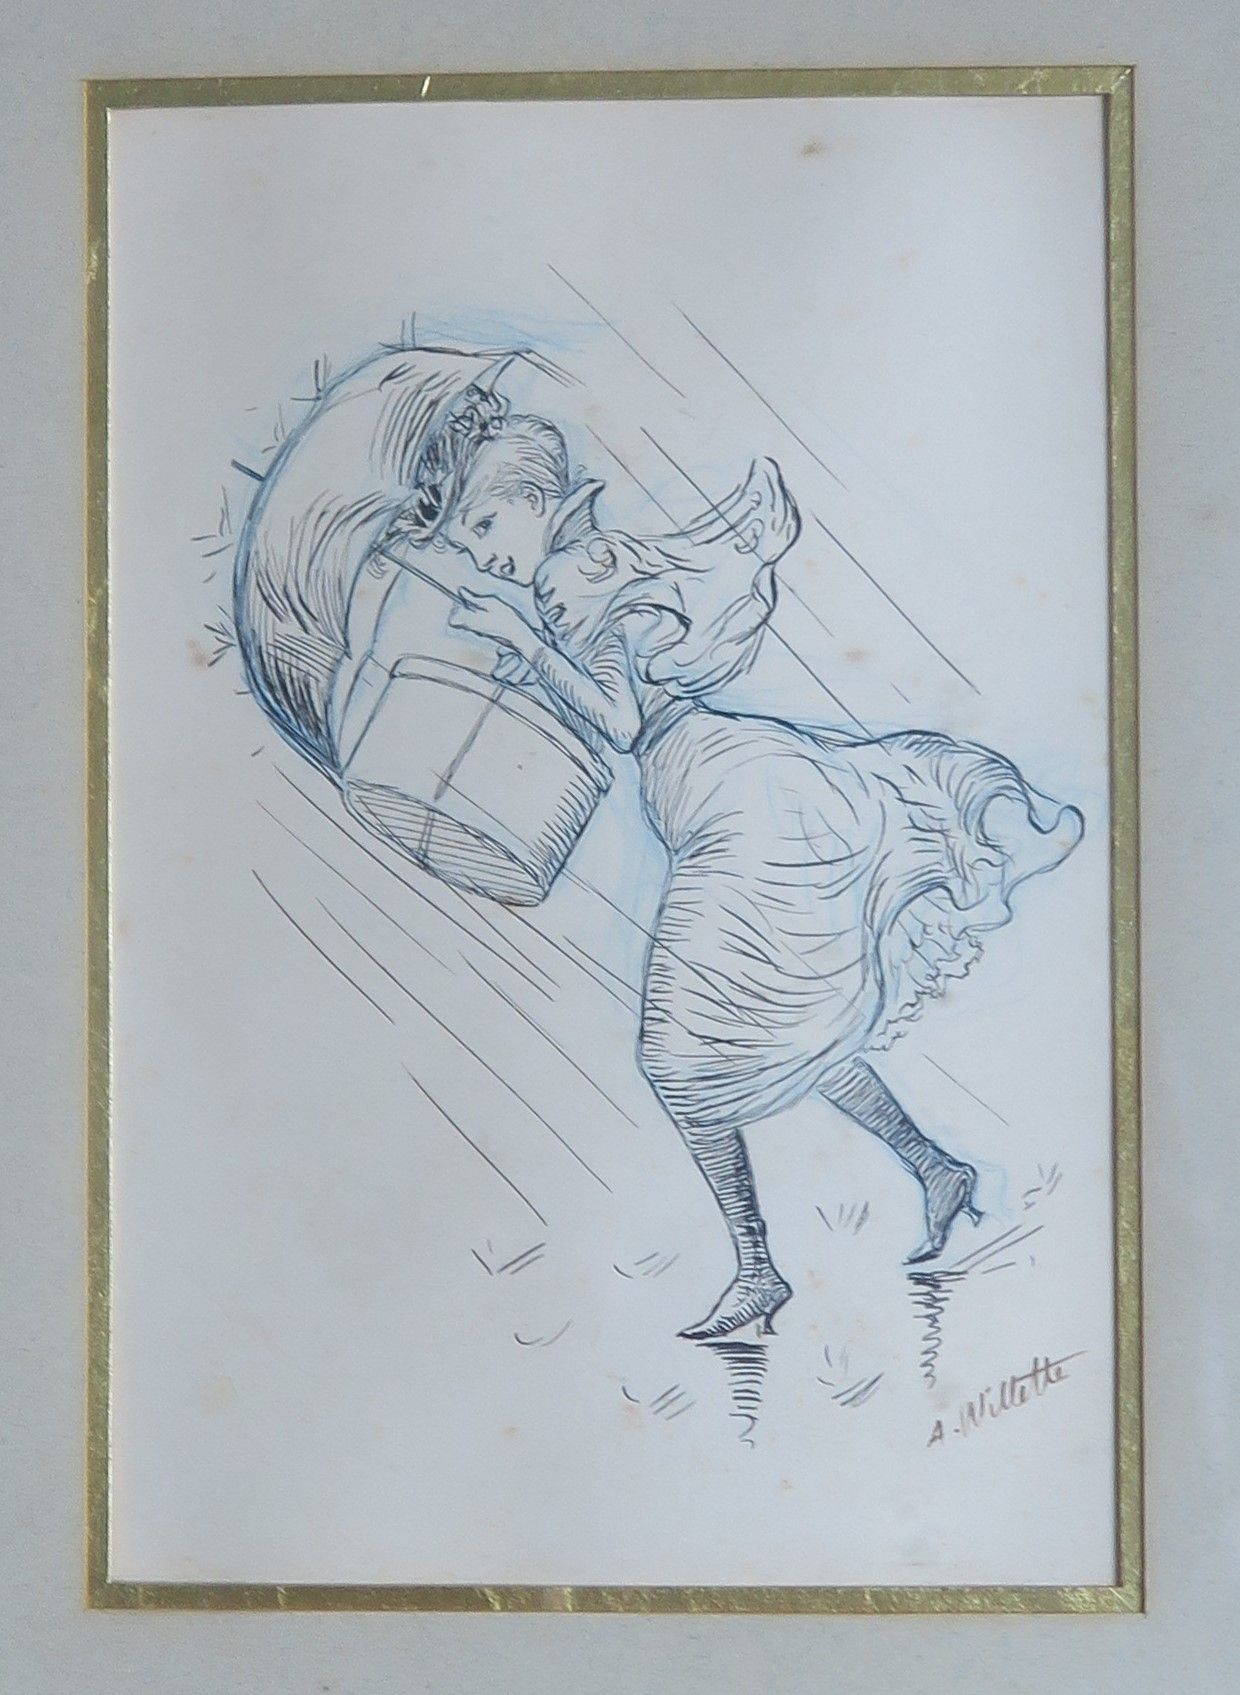 Null 阿道夫-威利特(1857-1926)

大风

纸上水墨，右下方签名

14 x 9 cm 正在观看